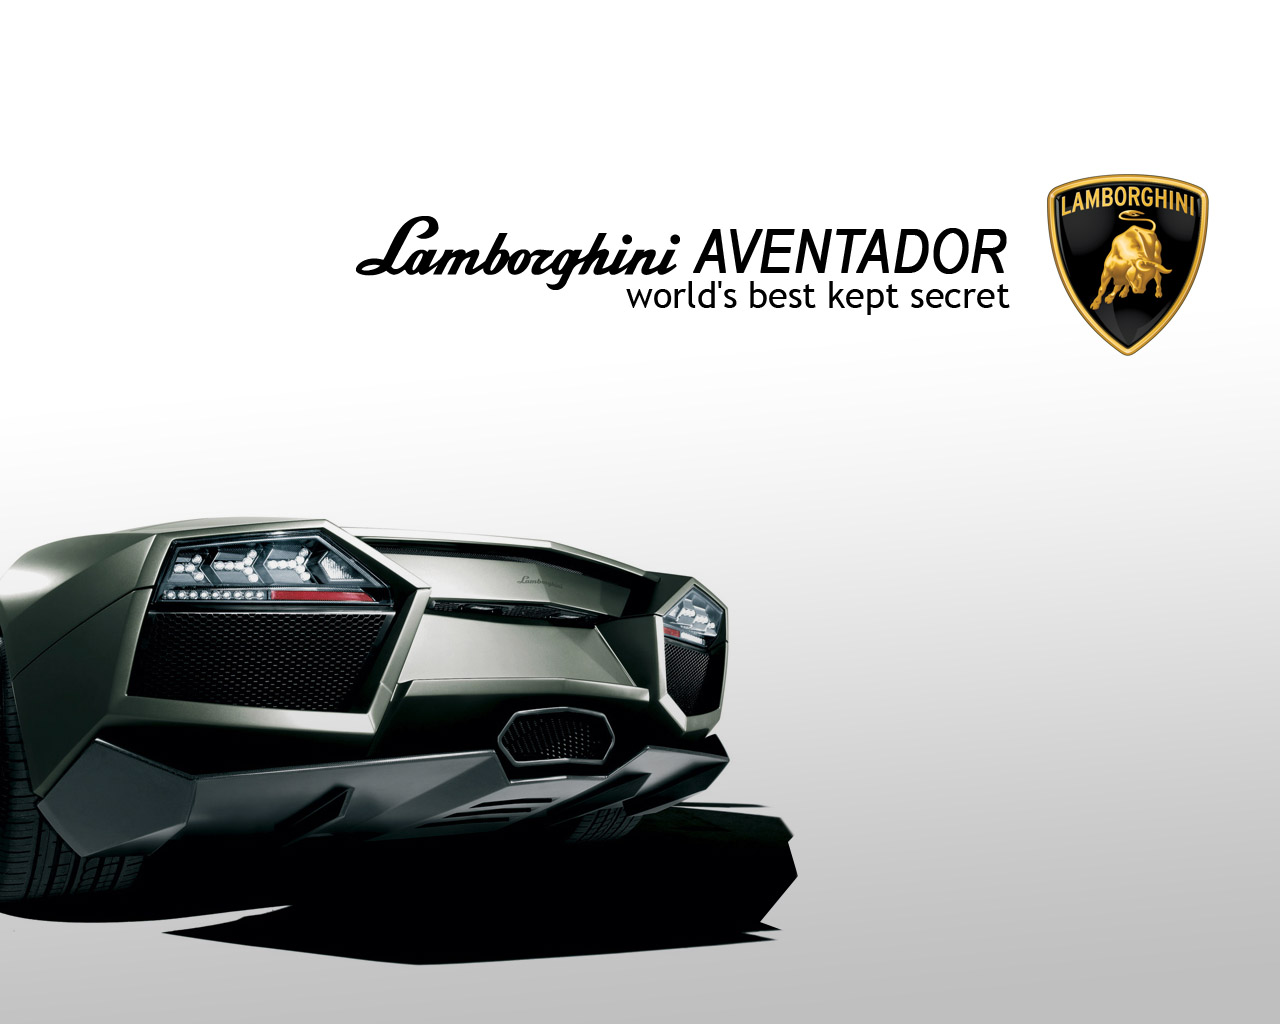 Новое лого ламборгини. Ламборгини эмблема. Lamborghini Aventador логотип. Шрифт Ламборгини. Ламборгини с эмблемой ГАЗ.